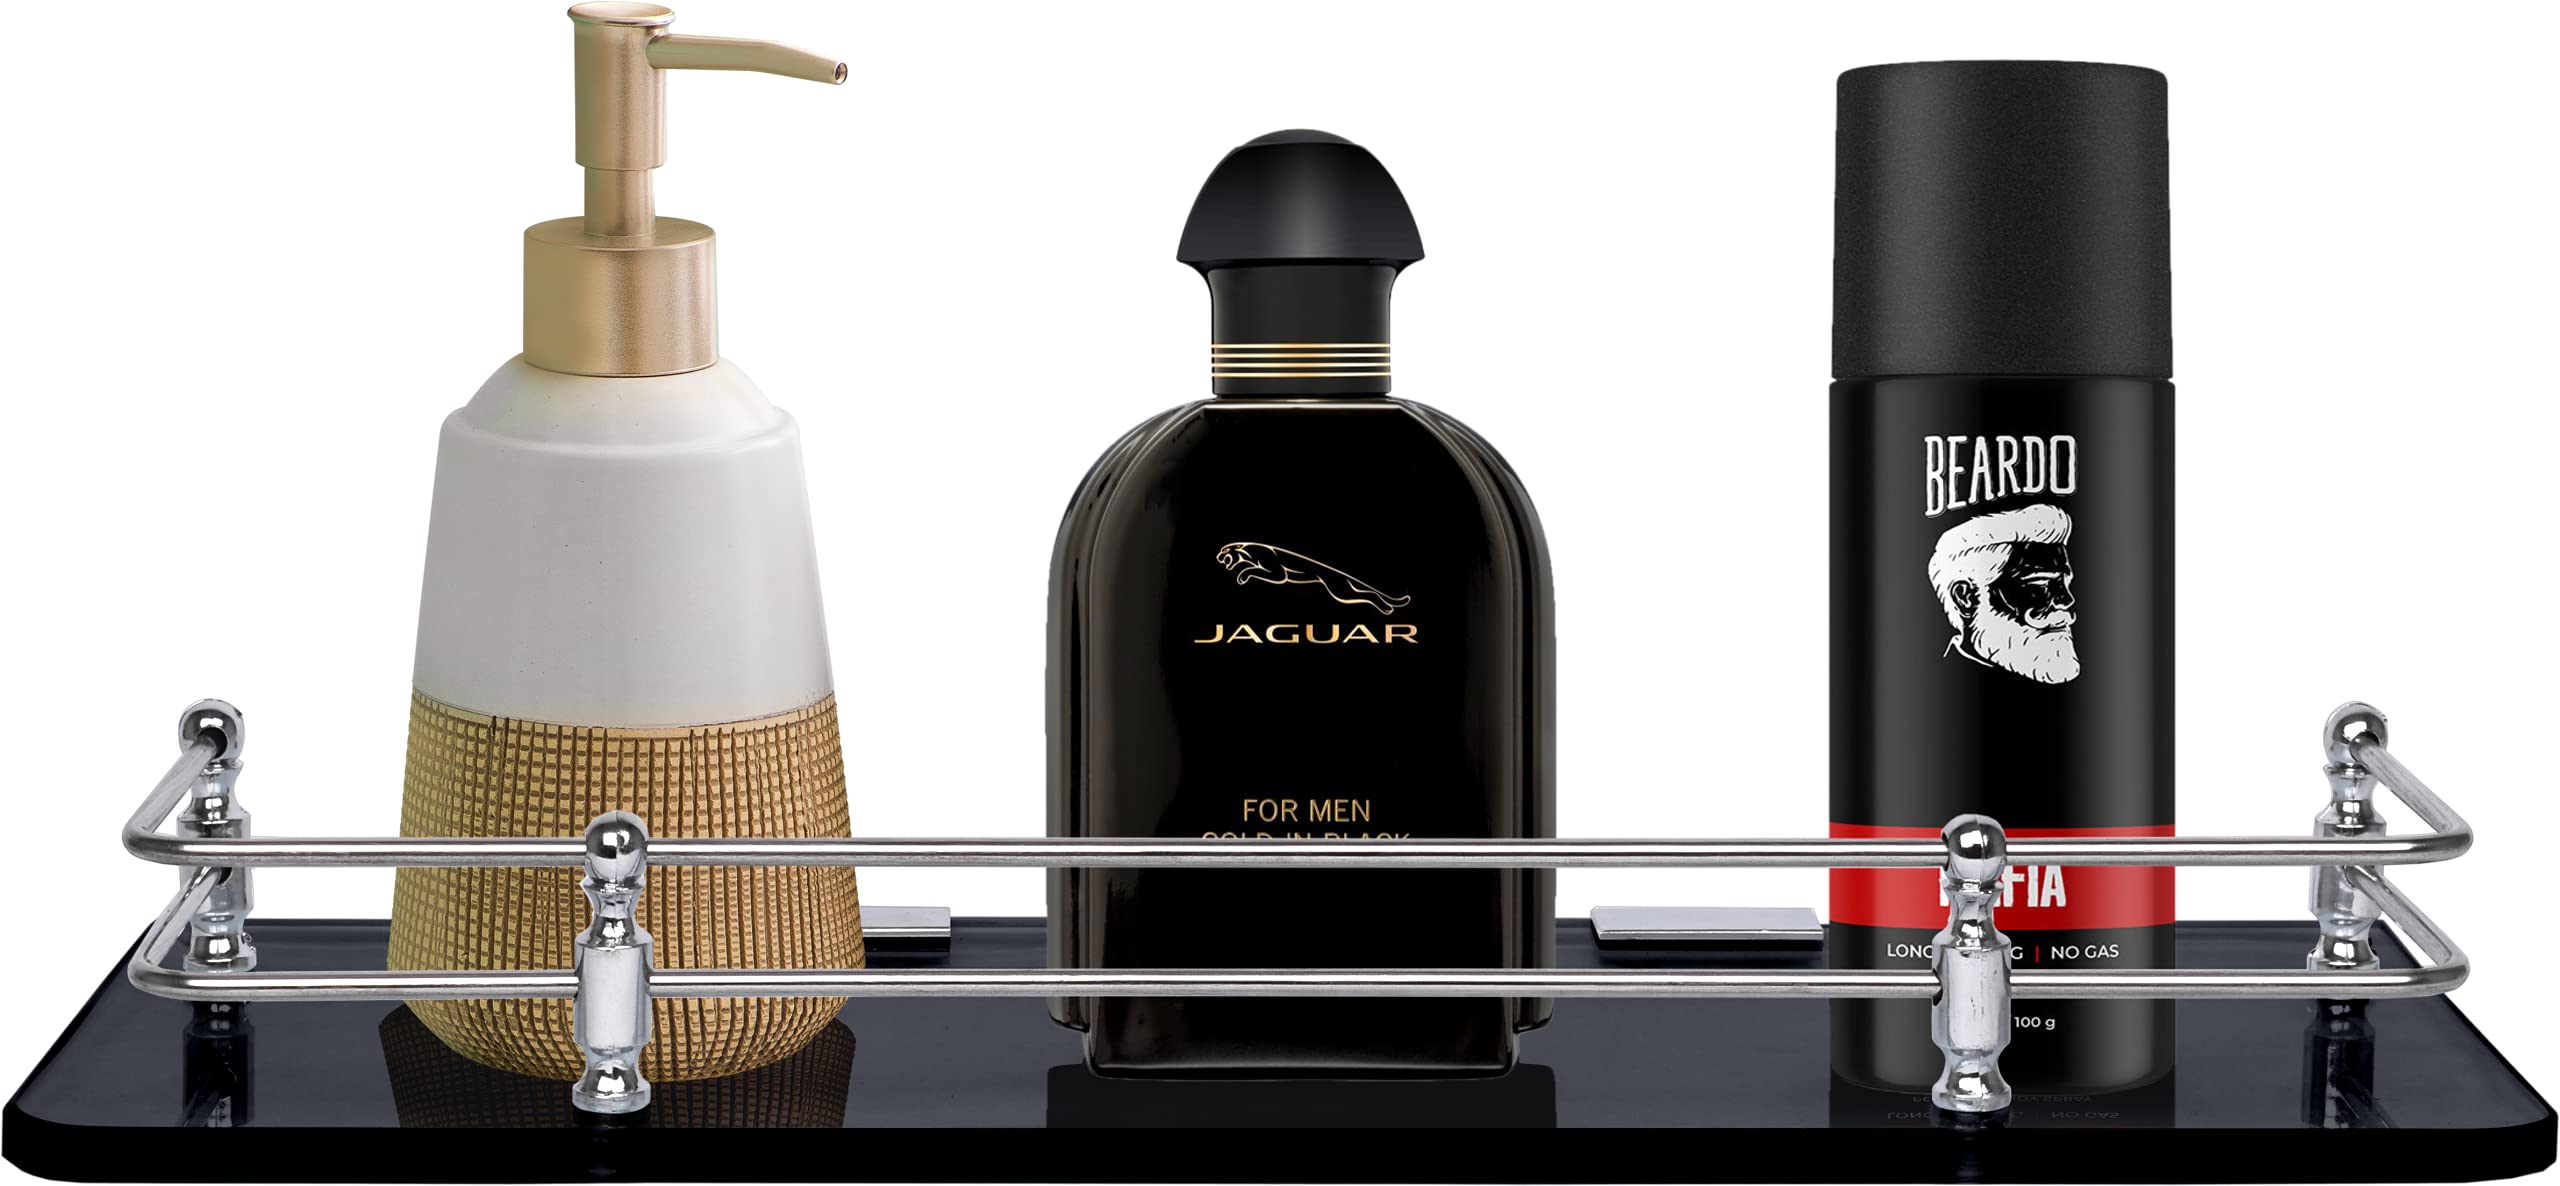 Plantex Premium Black Glass Shelf for Bathroom/Kitchen/Living Room - Bathroom Accessories (Polished, 18x6 Inches) - Pack of 2